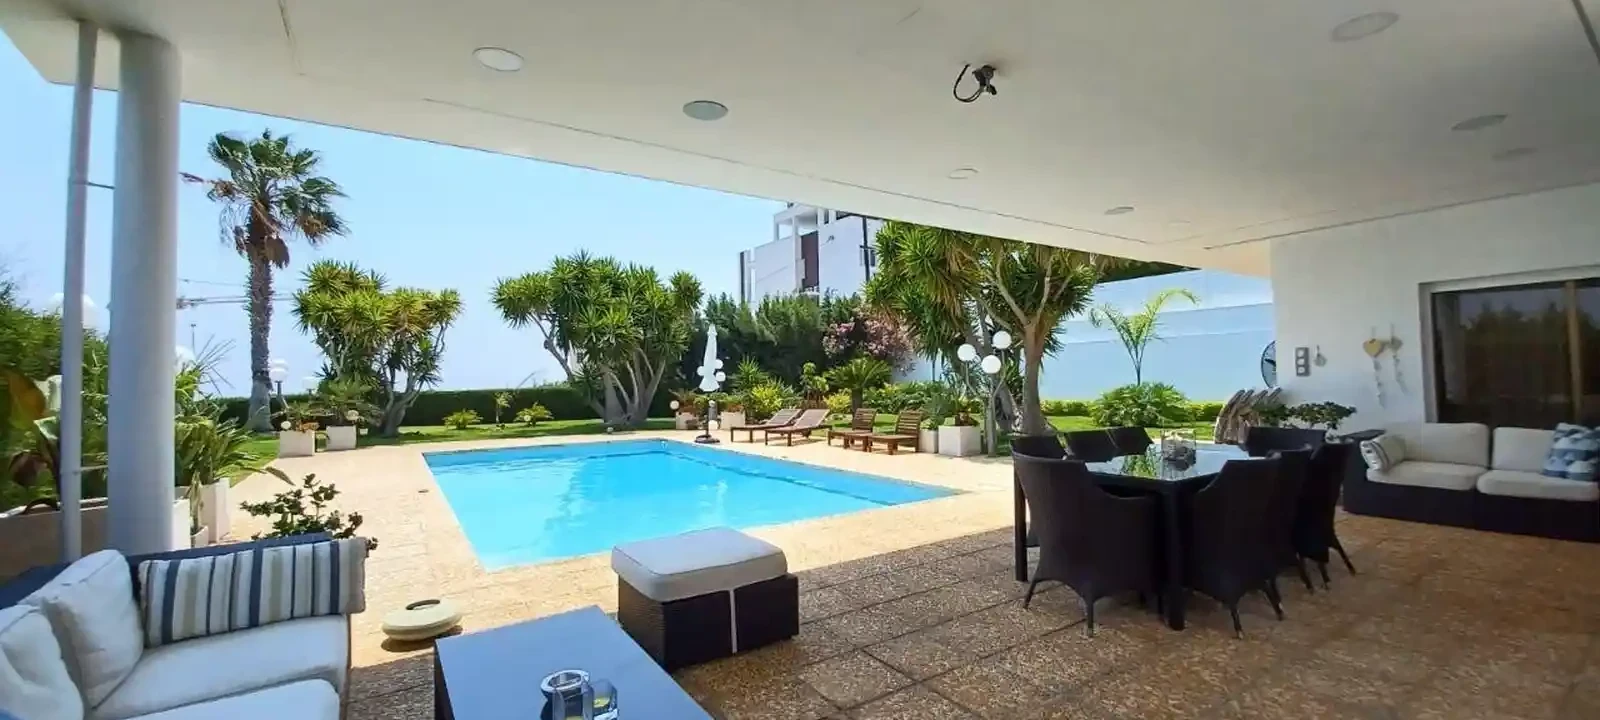 7-bedroom villa fоr sаle €3.600.000, image 1